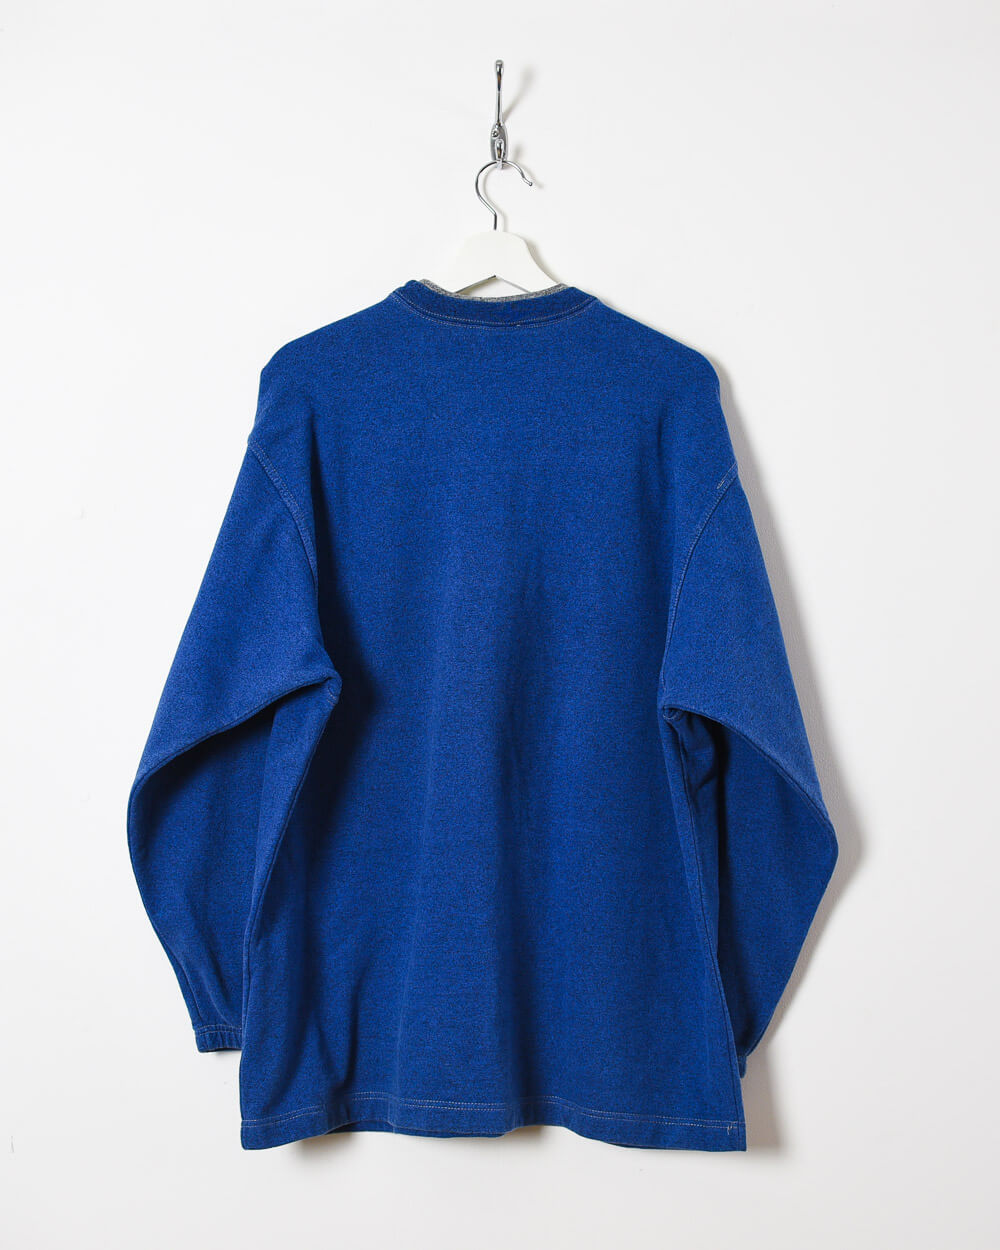 Blue Champion Sweatshirt - X-Large